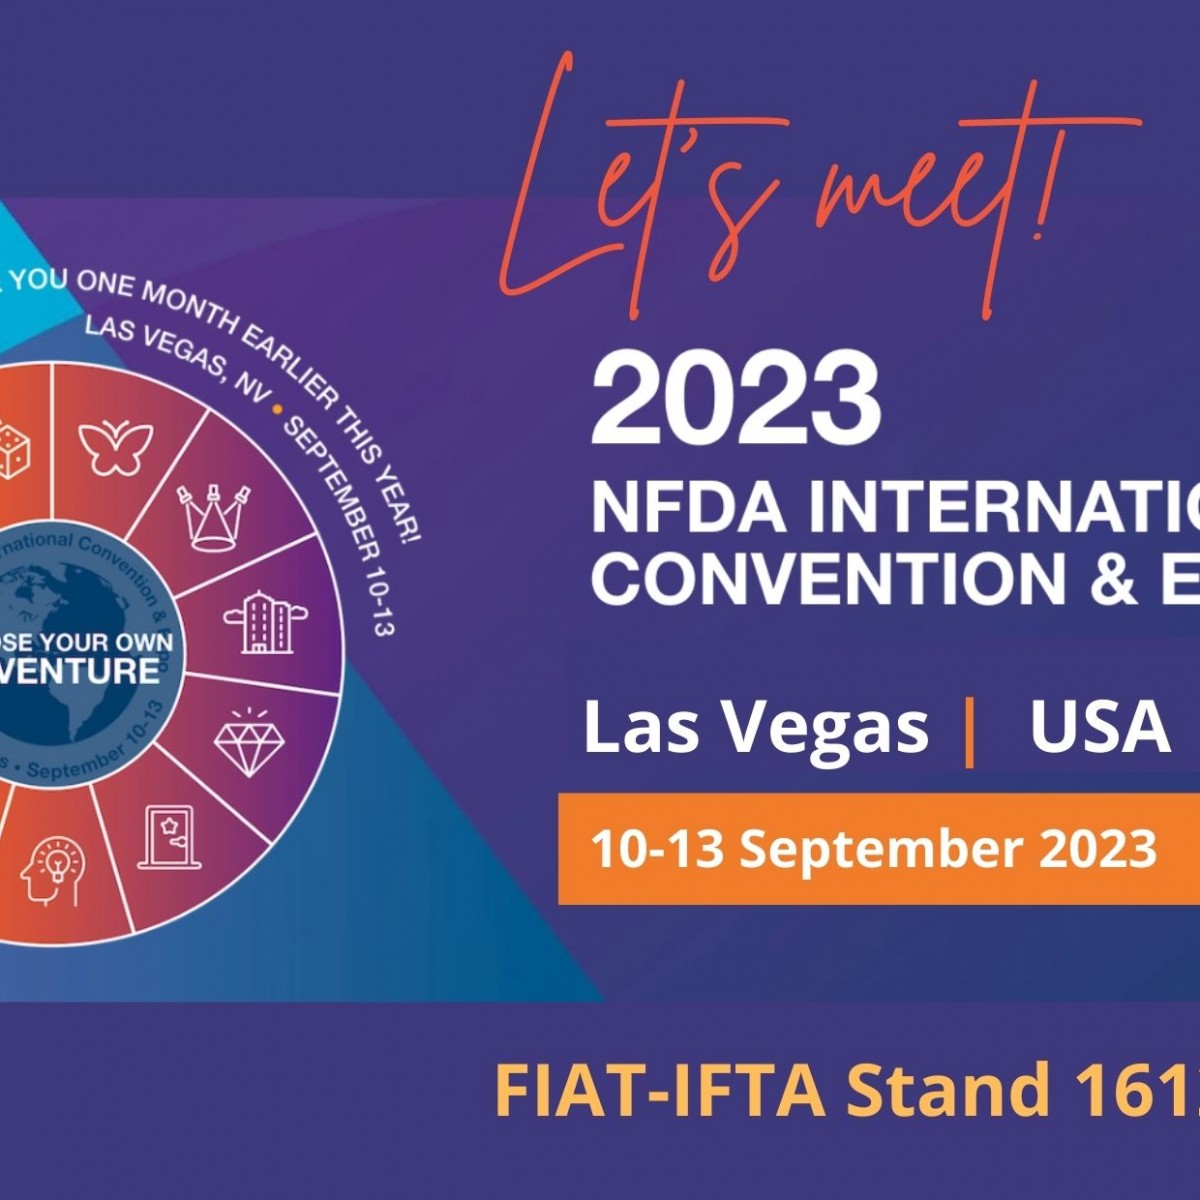 Meet us at the NFDA Convention & Expo 2023 in Las Vegas FIATIFTA